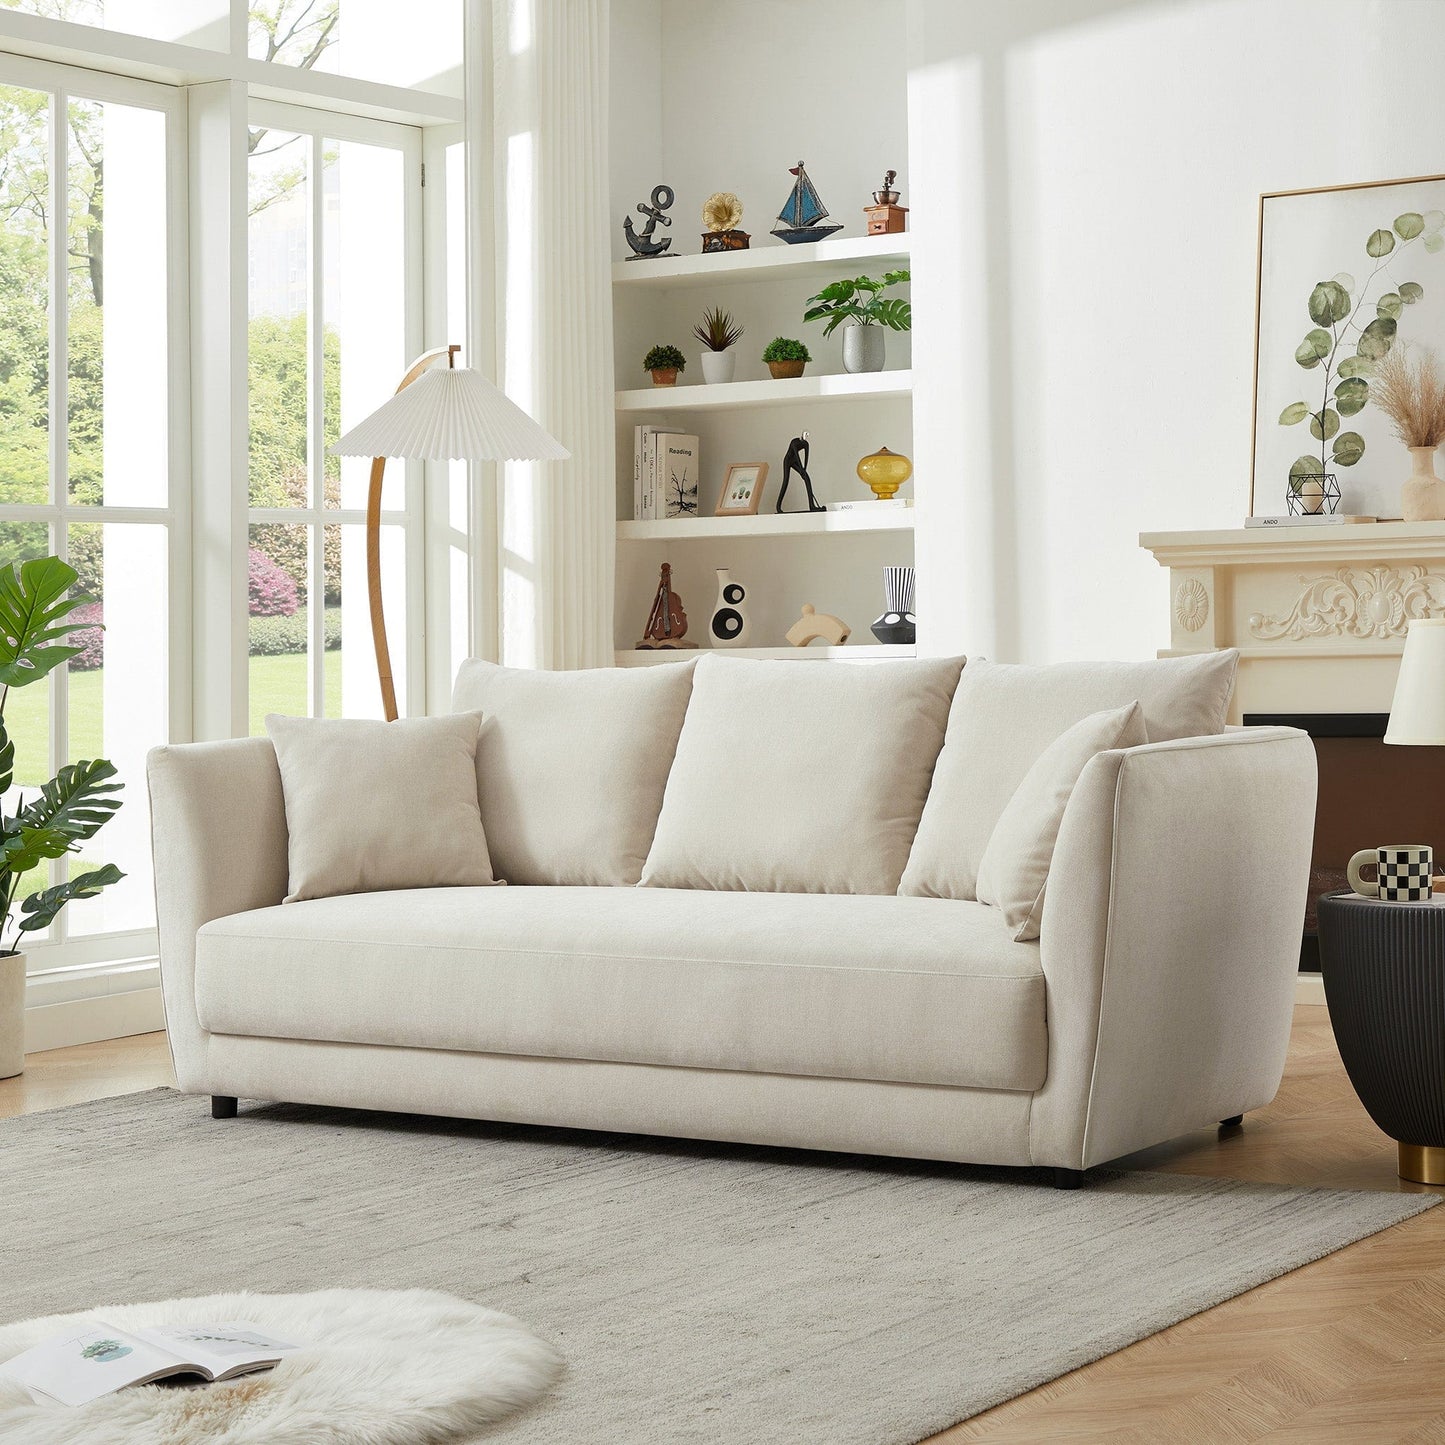 Ashcroft Furniture Co Pala Mid Century Modern Linen Sofa